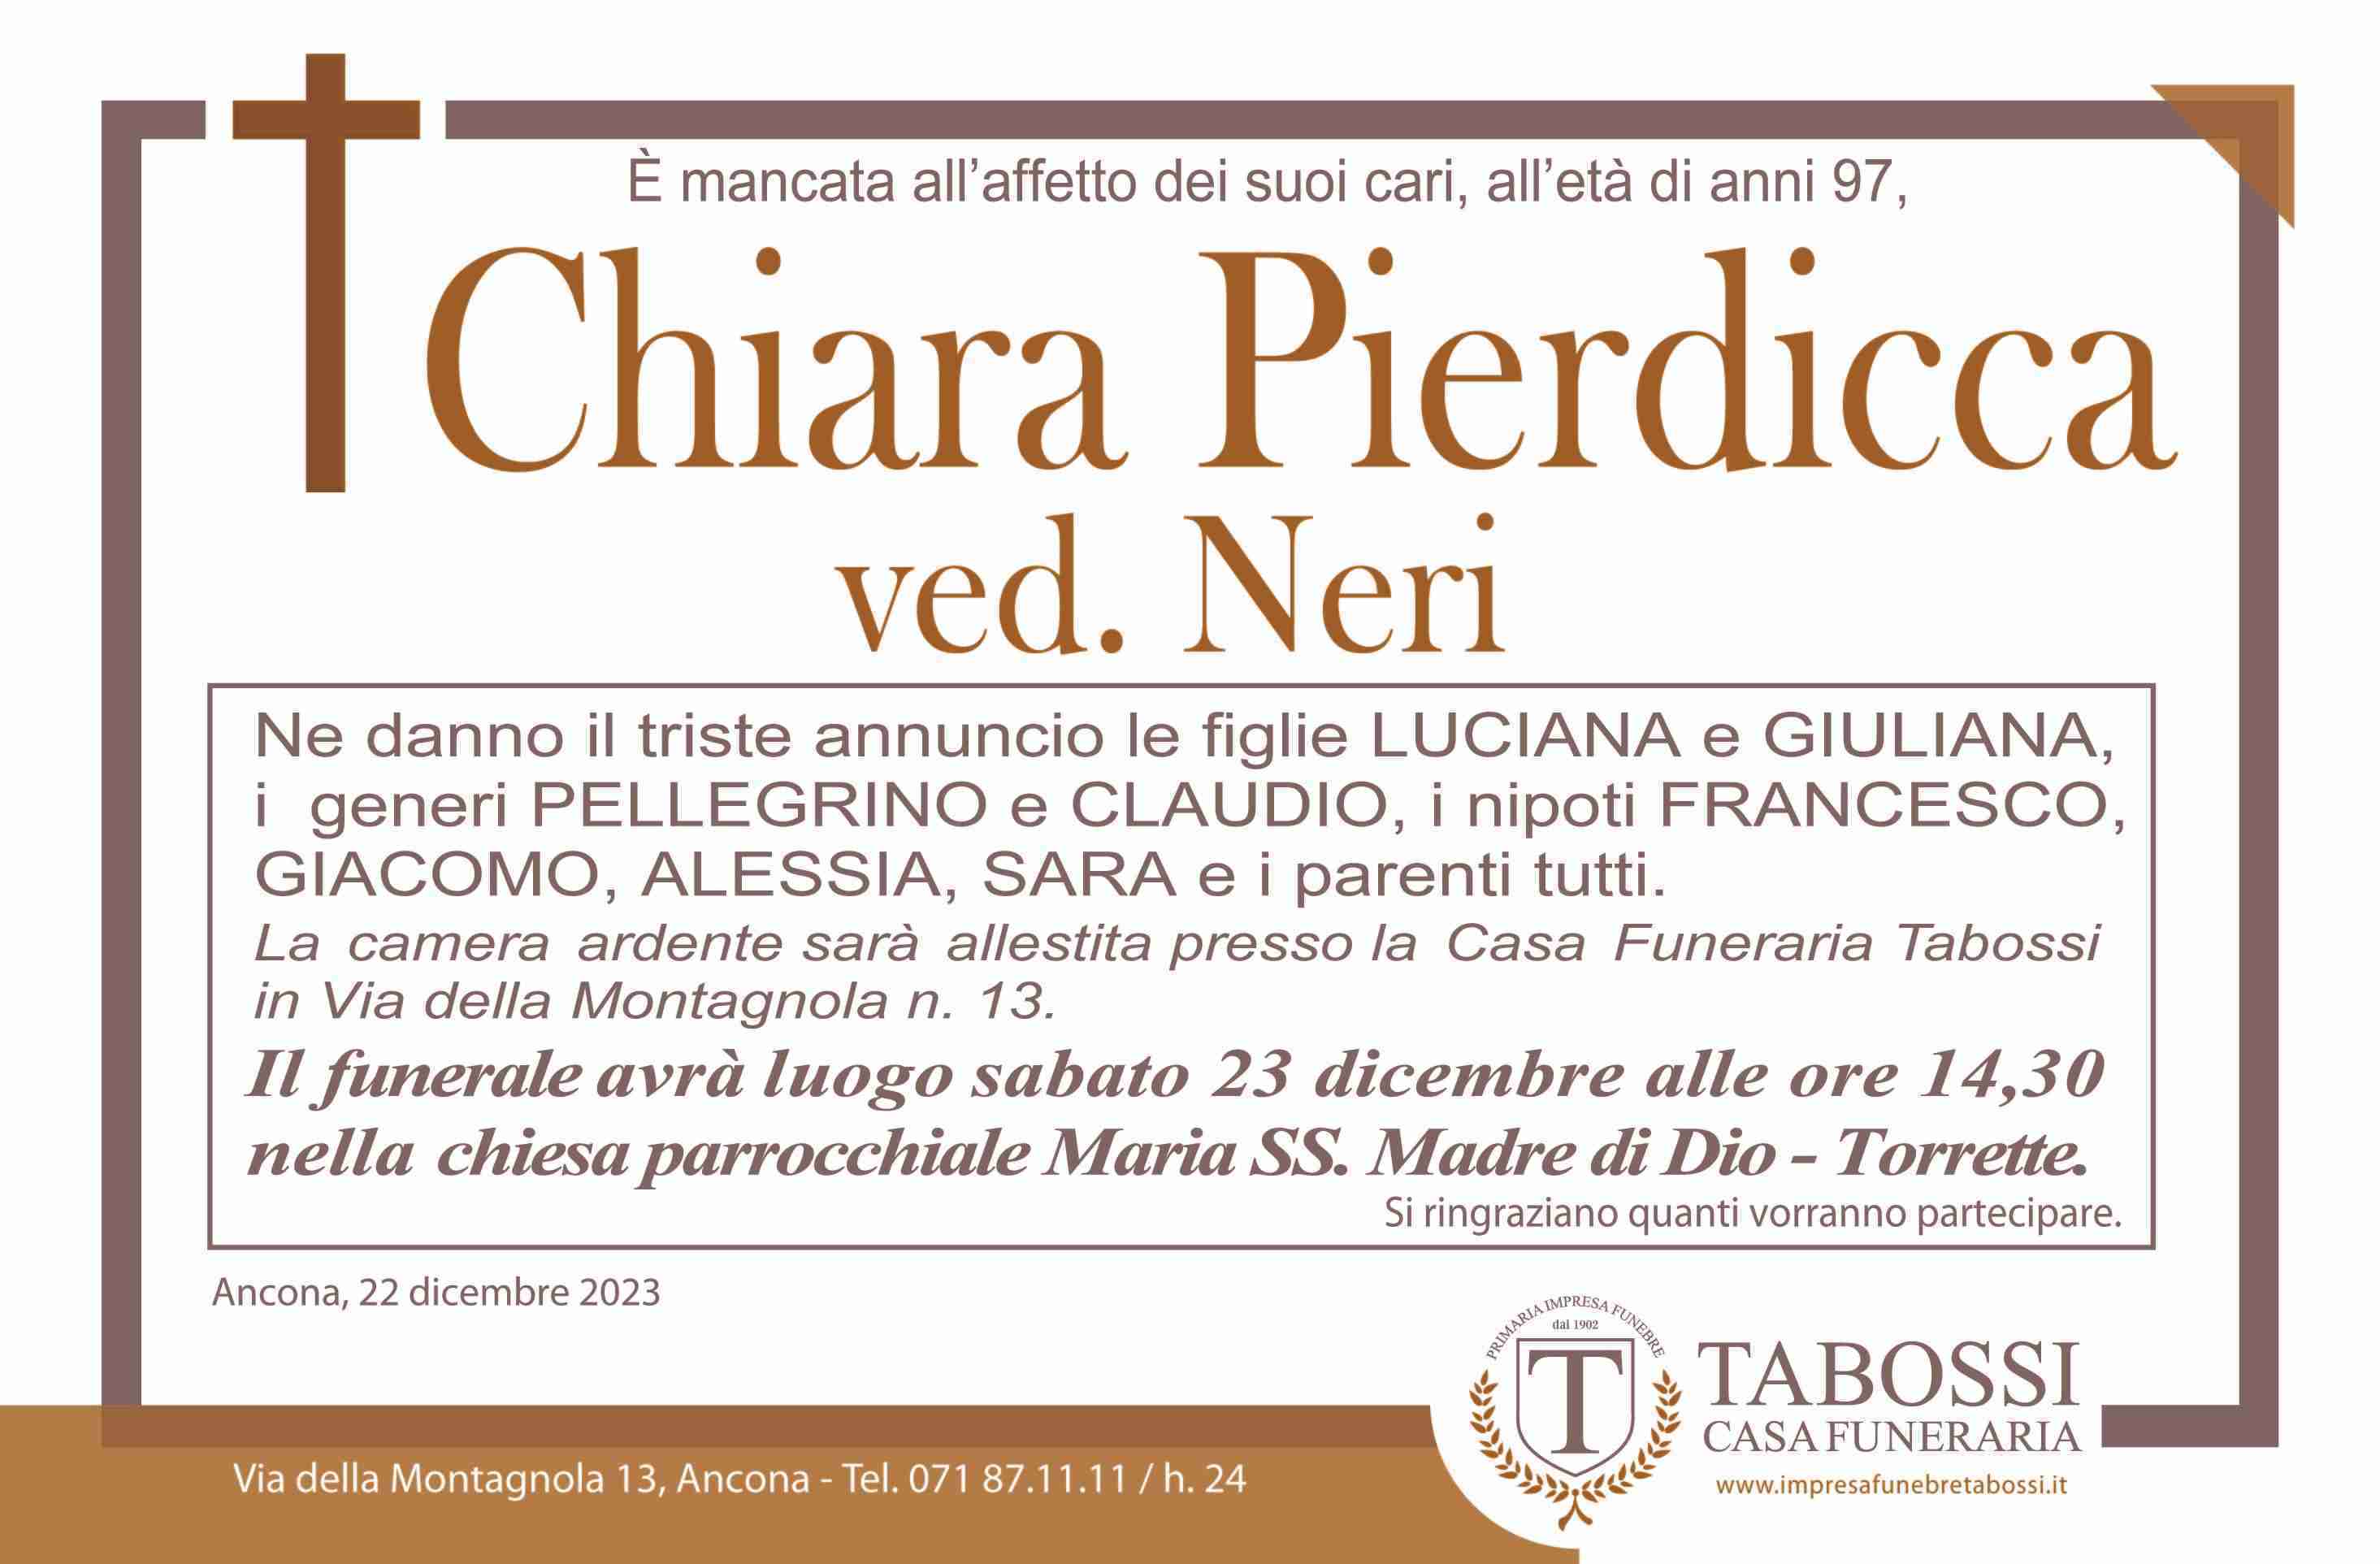 Chiara Pierdicca